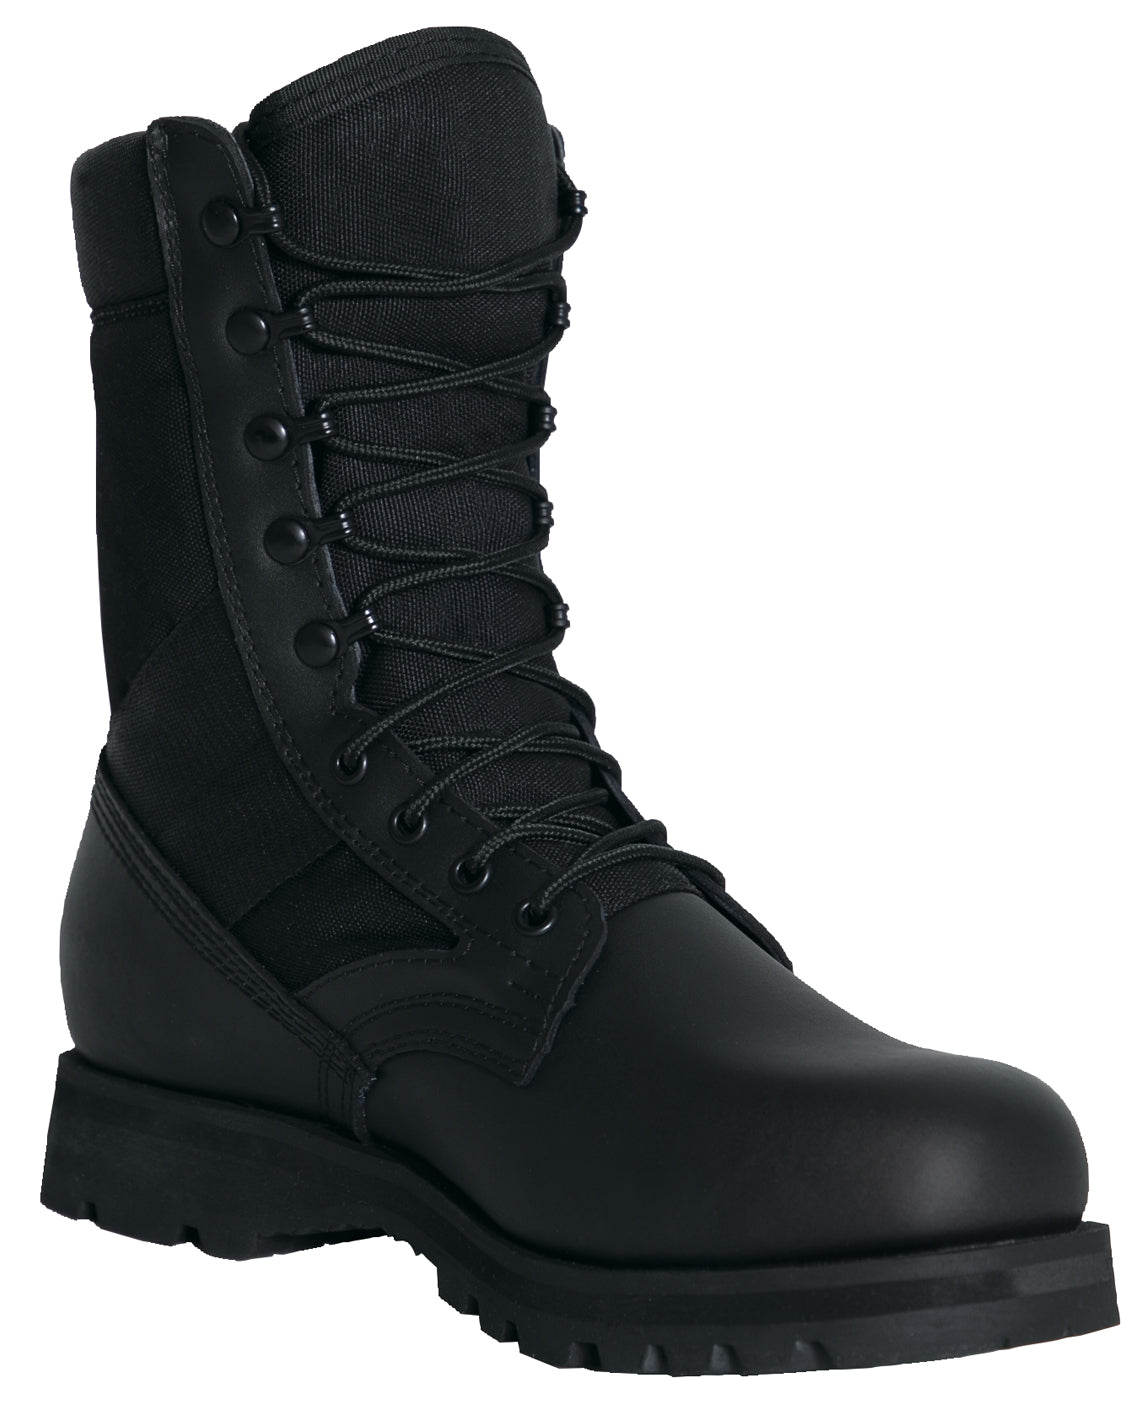 Milspec G.I. Type Sierra Sole Tactical Boots - 8 Inch Military & Tactical Boots MilTac Tactical Military Outdoor Gear Australia